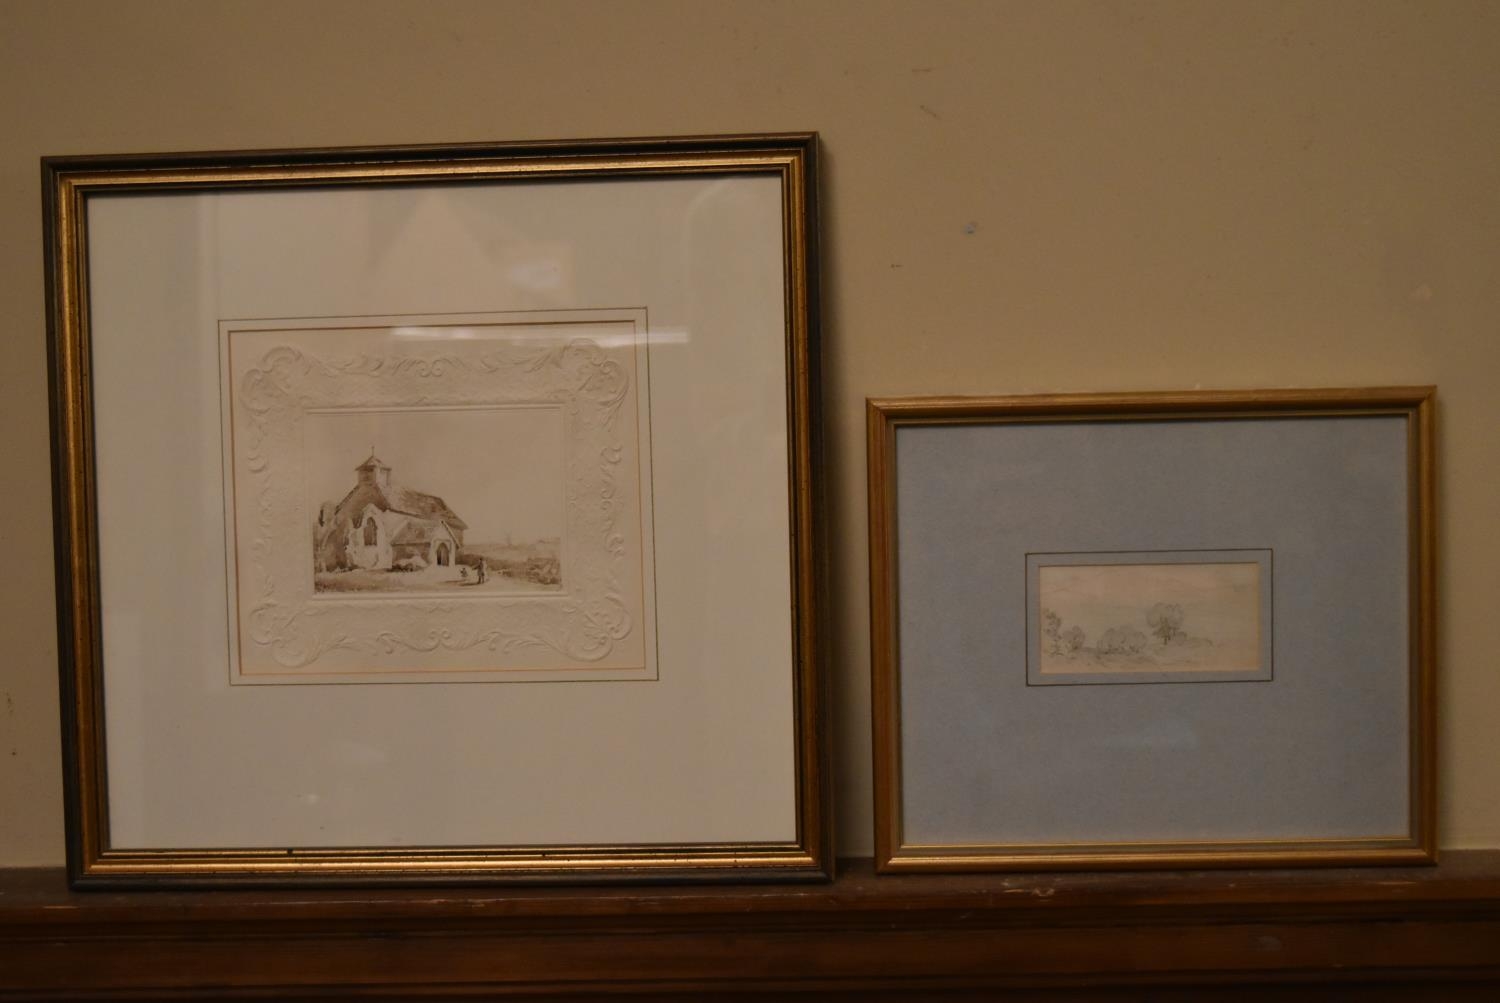 James Holworthy OWS (1781-1841) A framed and glazed pencil and ink landscape sketch, label verso.